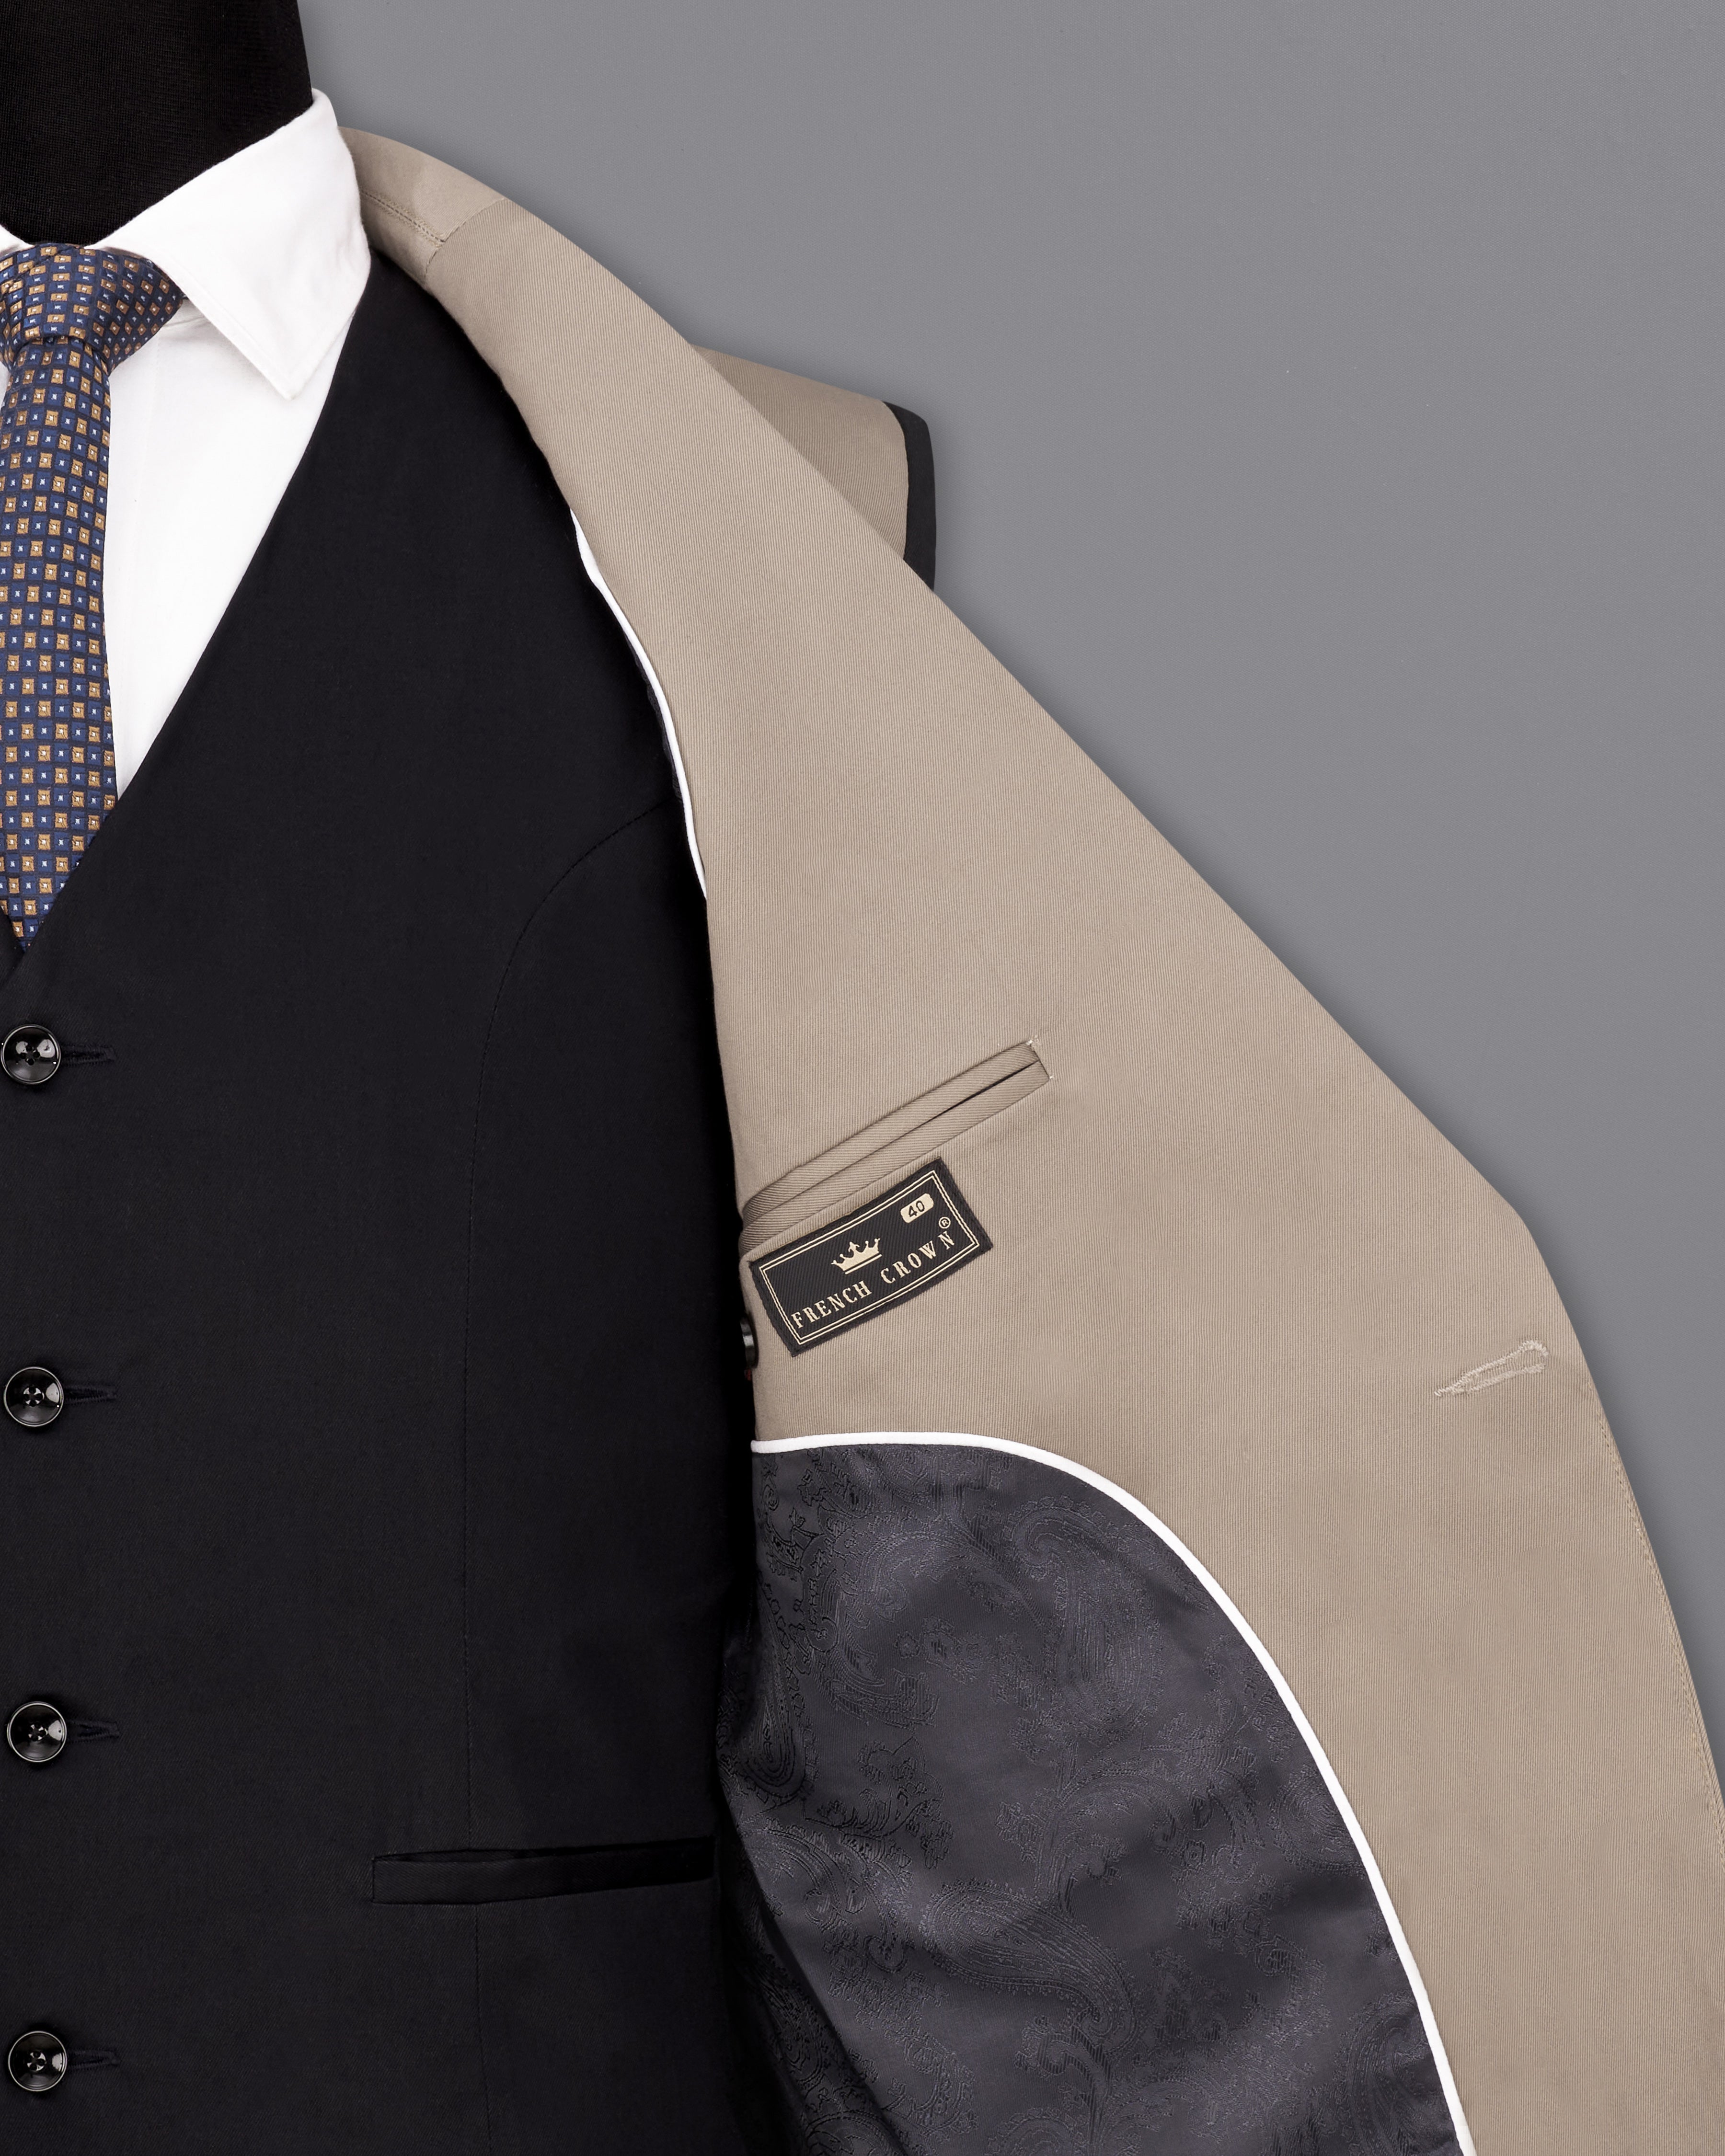 Martini Brown and Black Premium Cotton Designer Blazer